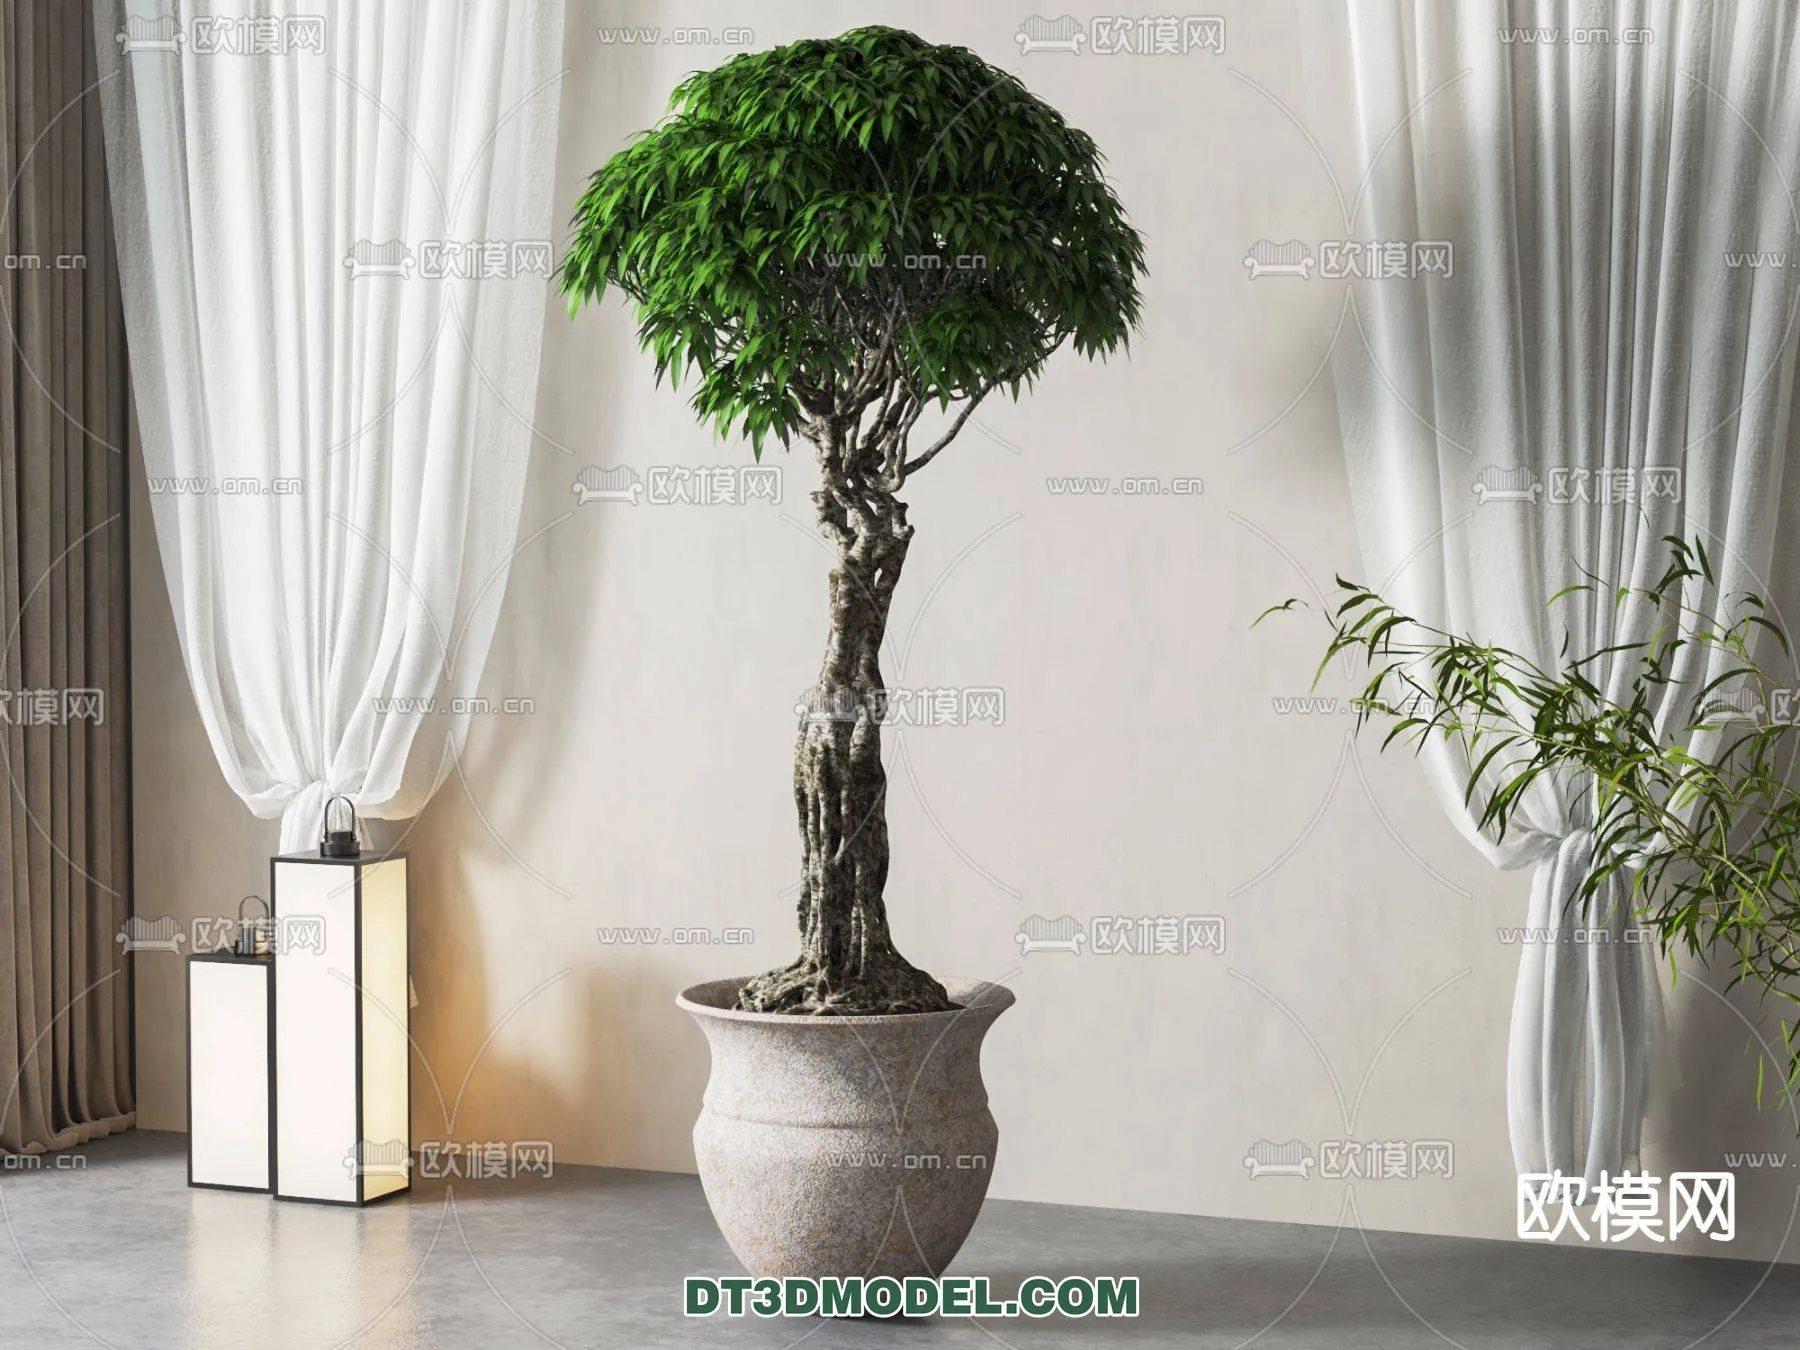 WABI SABI STYLE 3D MODELS – PLANTS – 0006